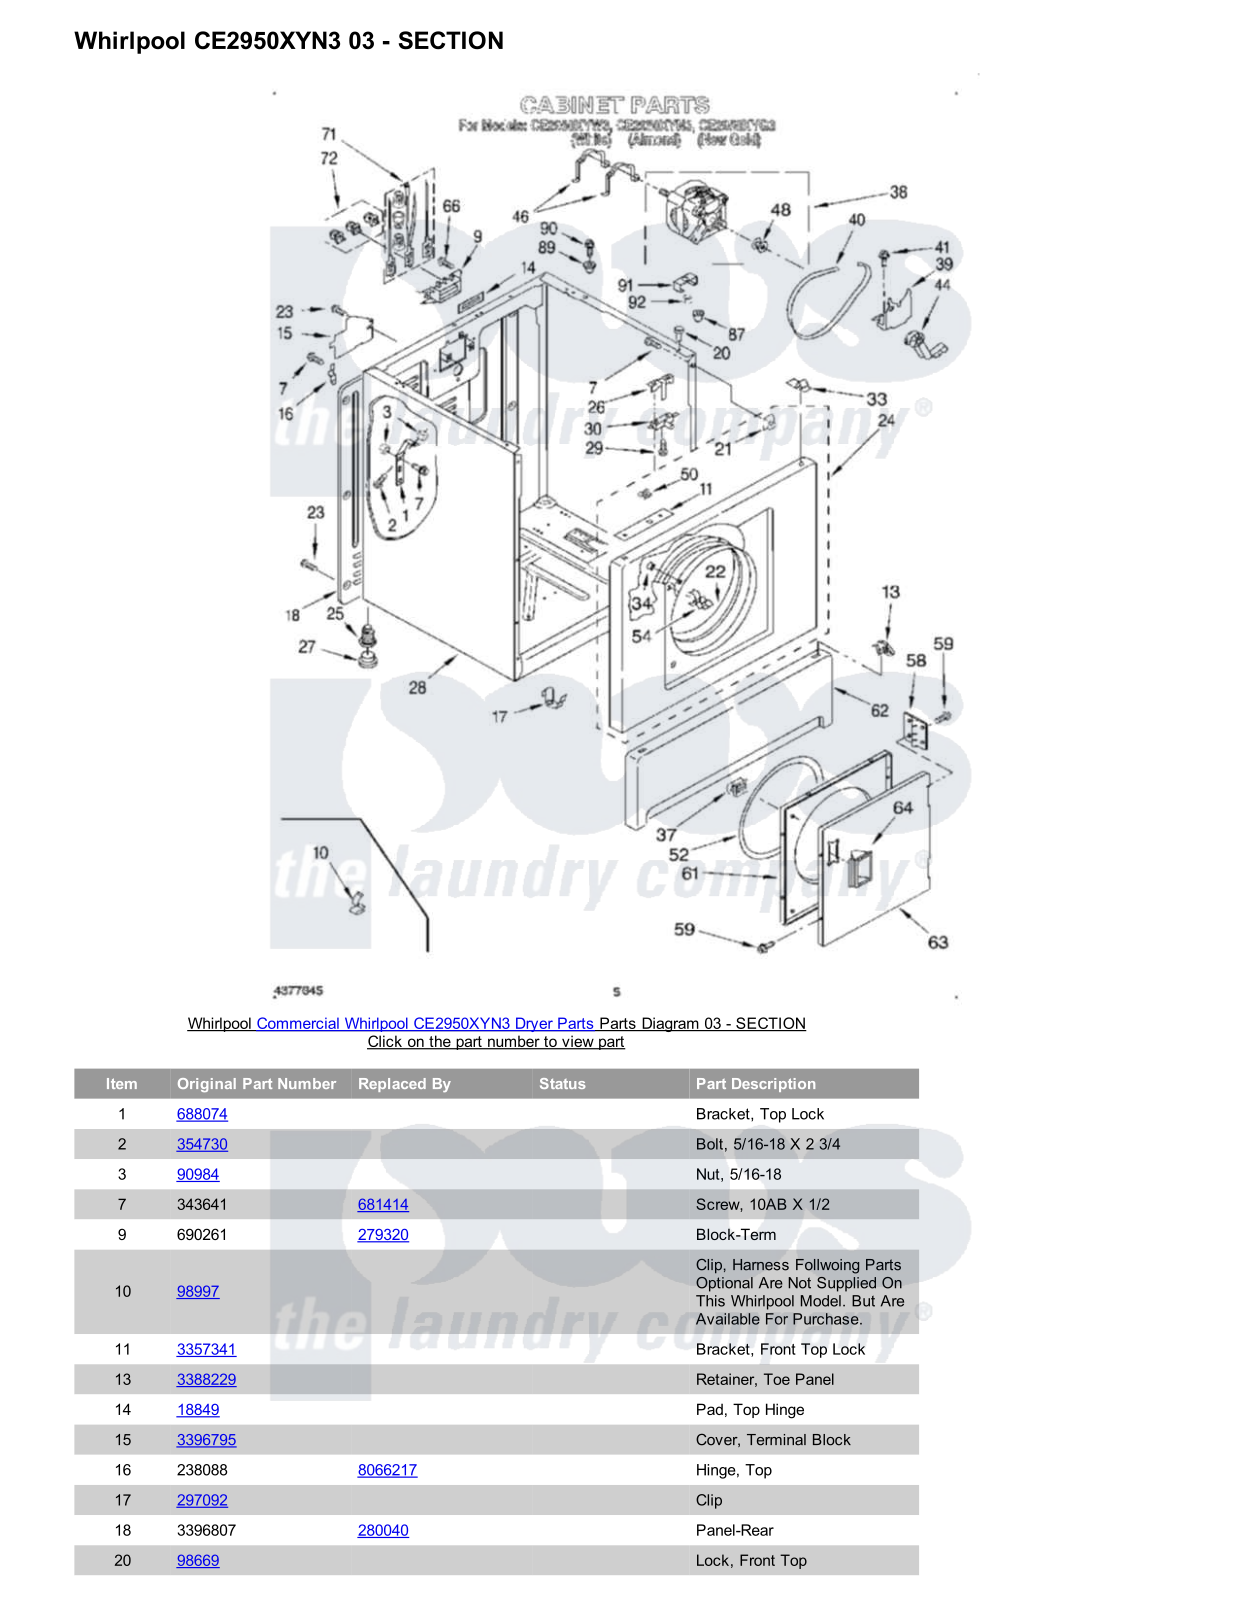 Whirlpool CE2950XYN3 Parts Diagram